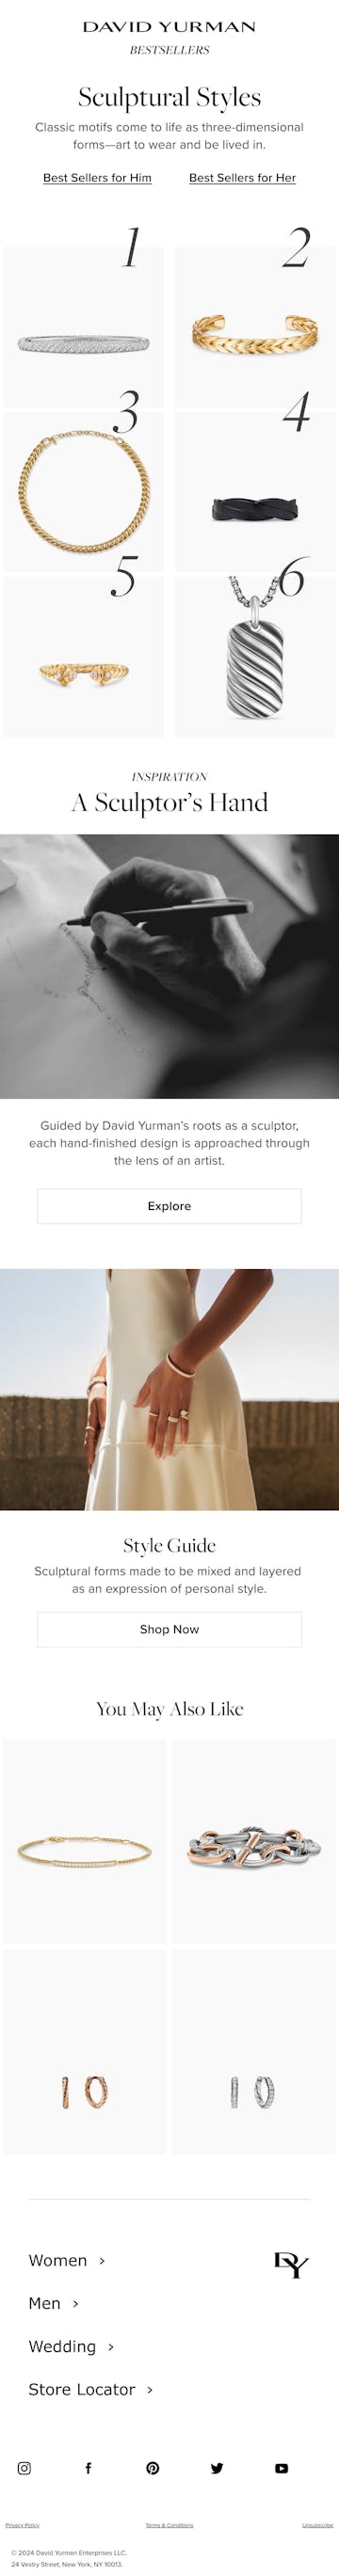 David Yurman Email Design Thumbnail Preview